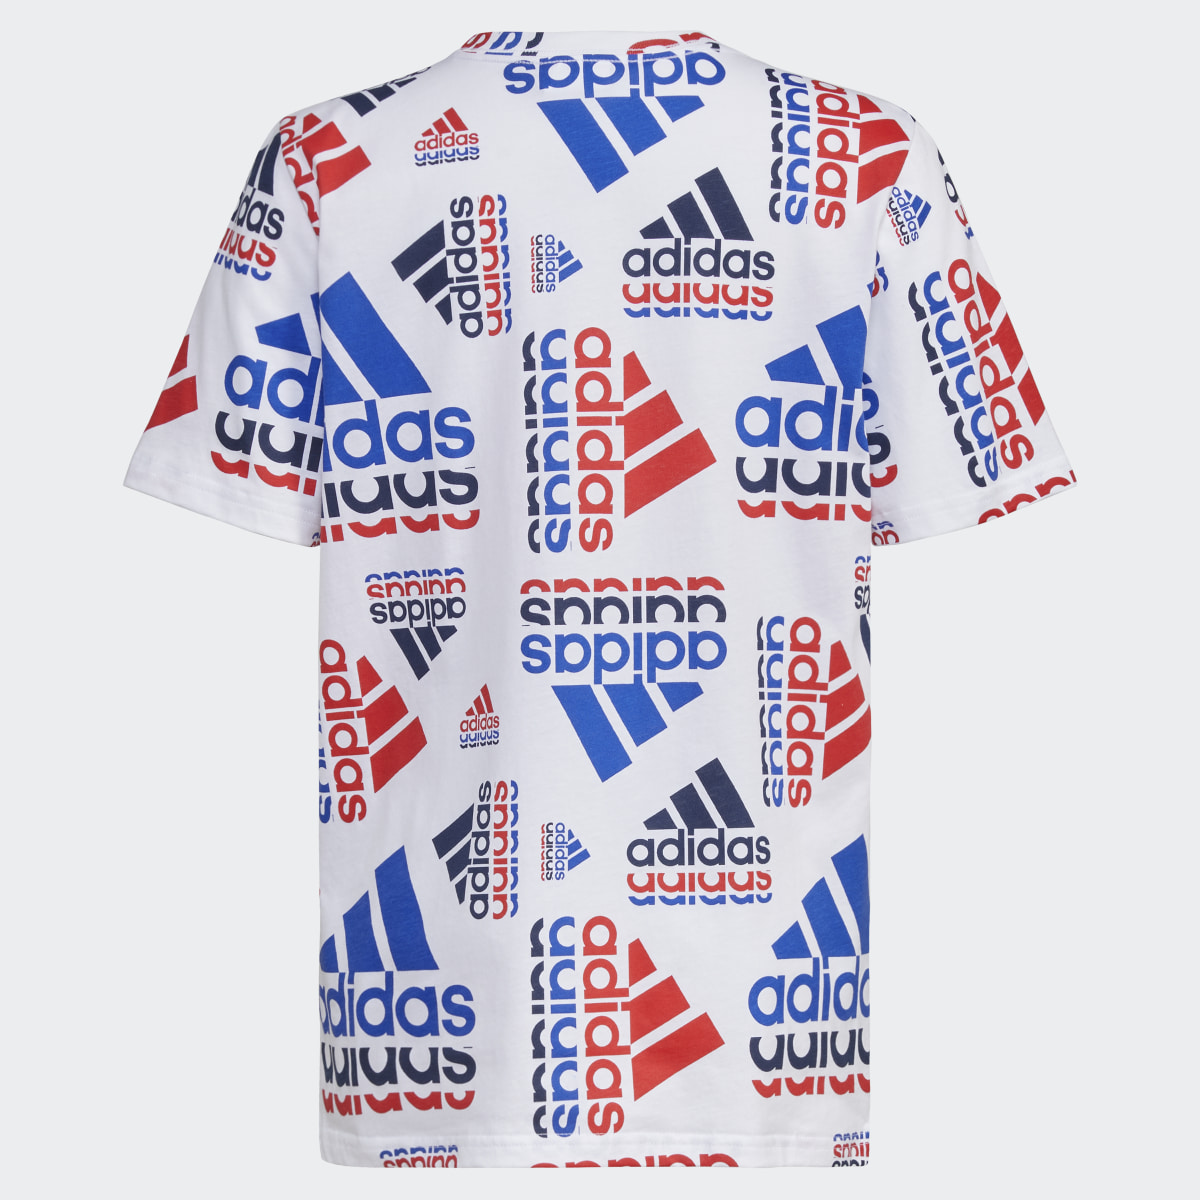 Adidas Short Sleeve "Brand Love Echo" All Over Print Tee. 4